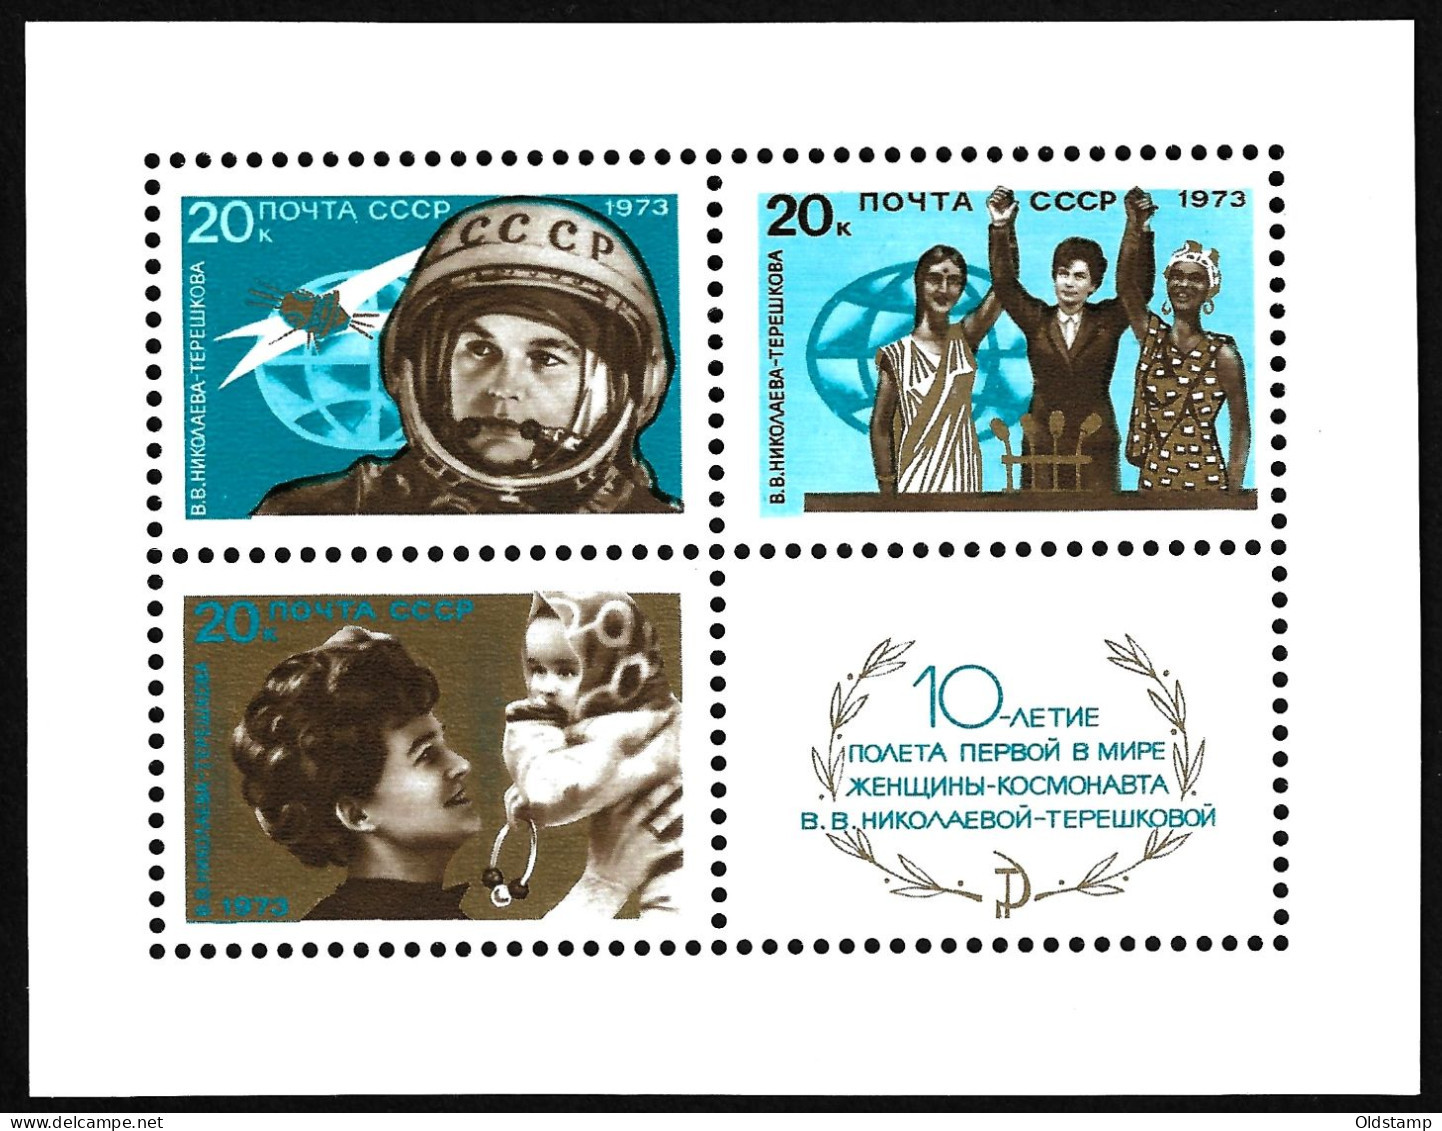 USSR 1973 SPACE MNH GAGARIN Soviet Union 20k. Space Gagarin 10th Flight Tereshkova MNH Stamp Mi. Block # - Colecciones